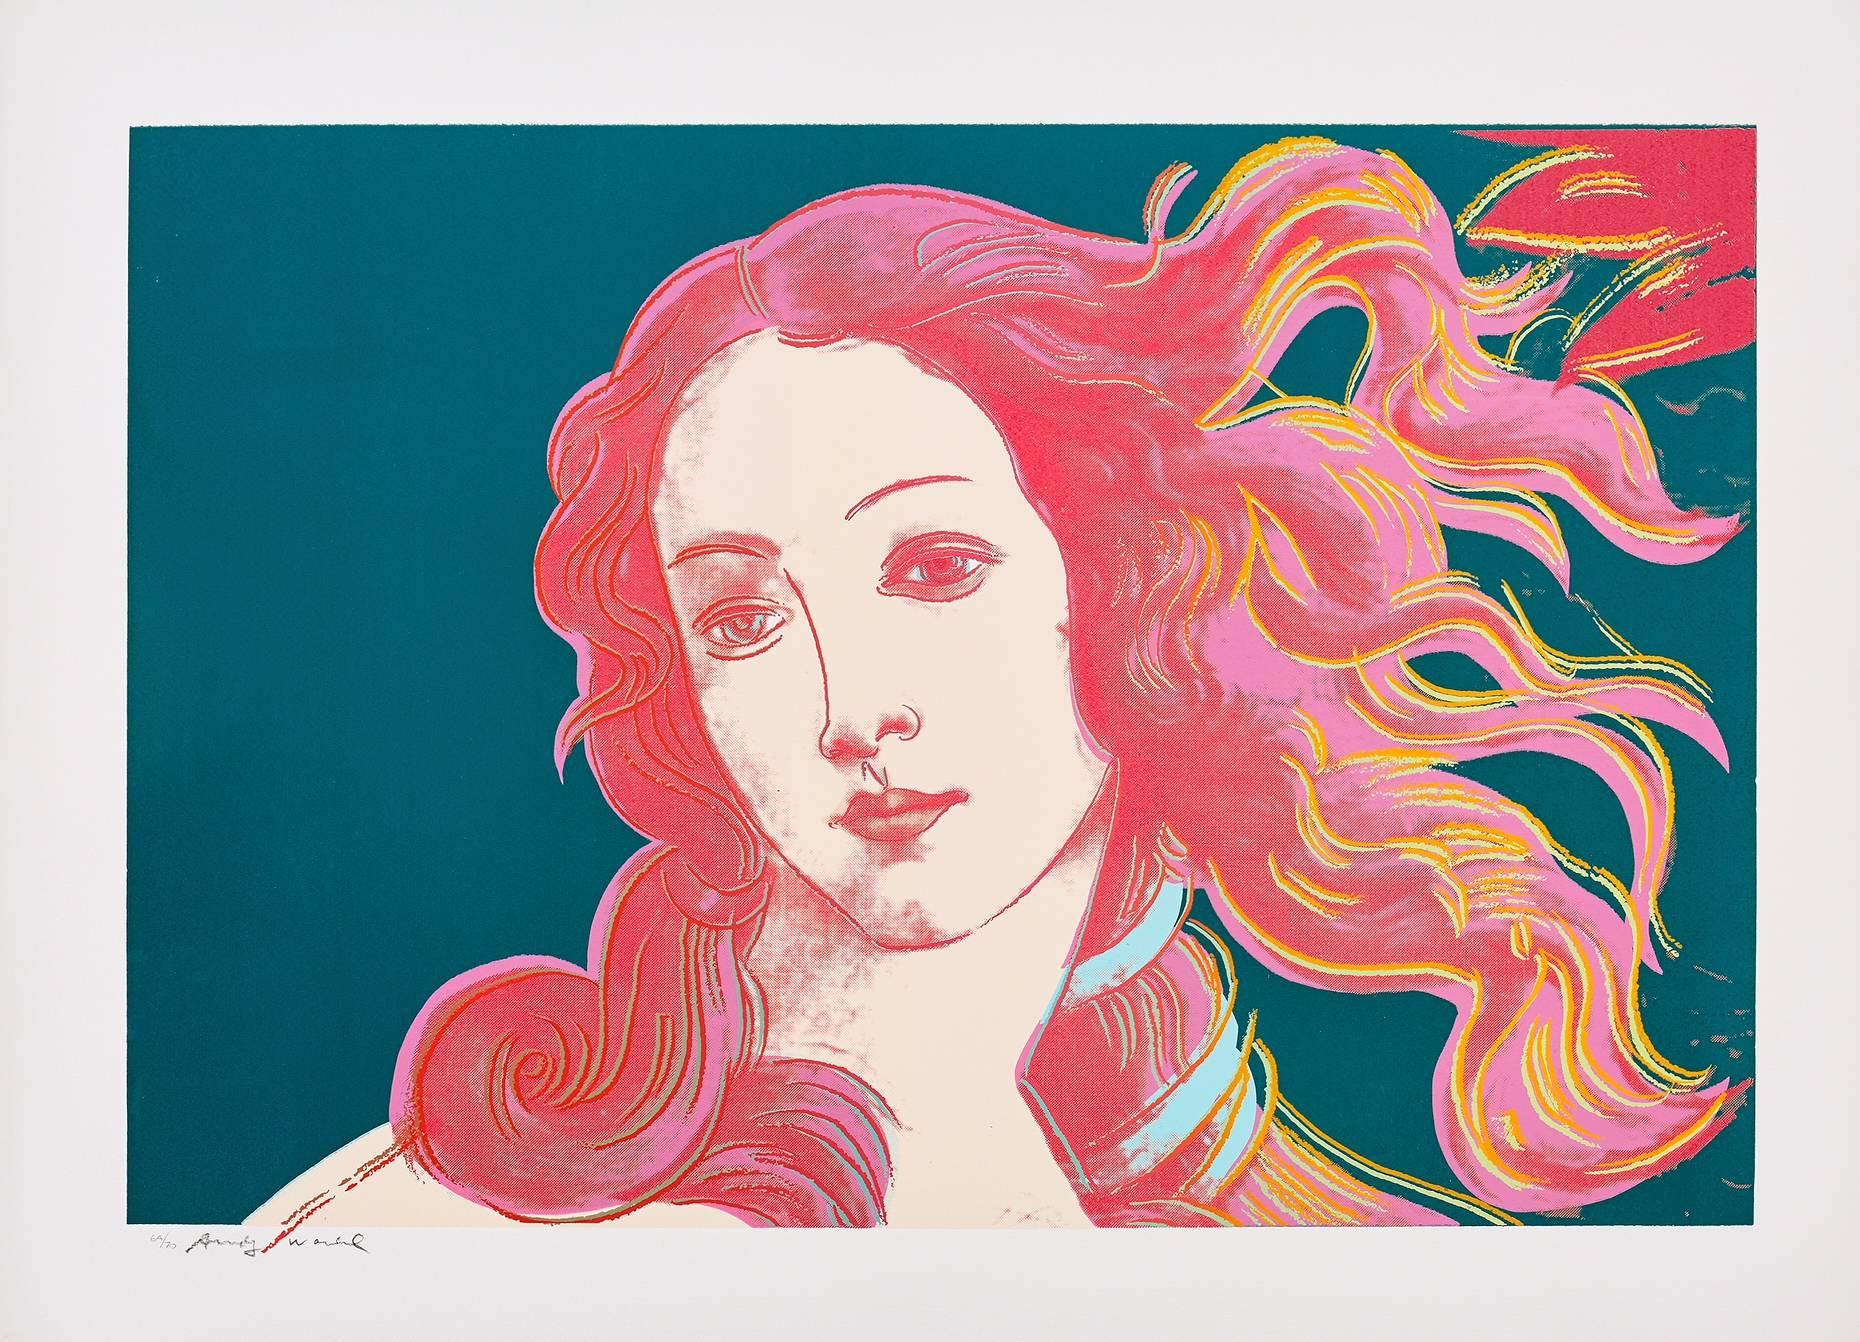 Andy Warhol Portrait Print - Details of Renaissance Paintings (Sandro Botticelli, Birth of Venus) F&S II.316